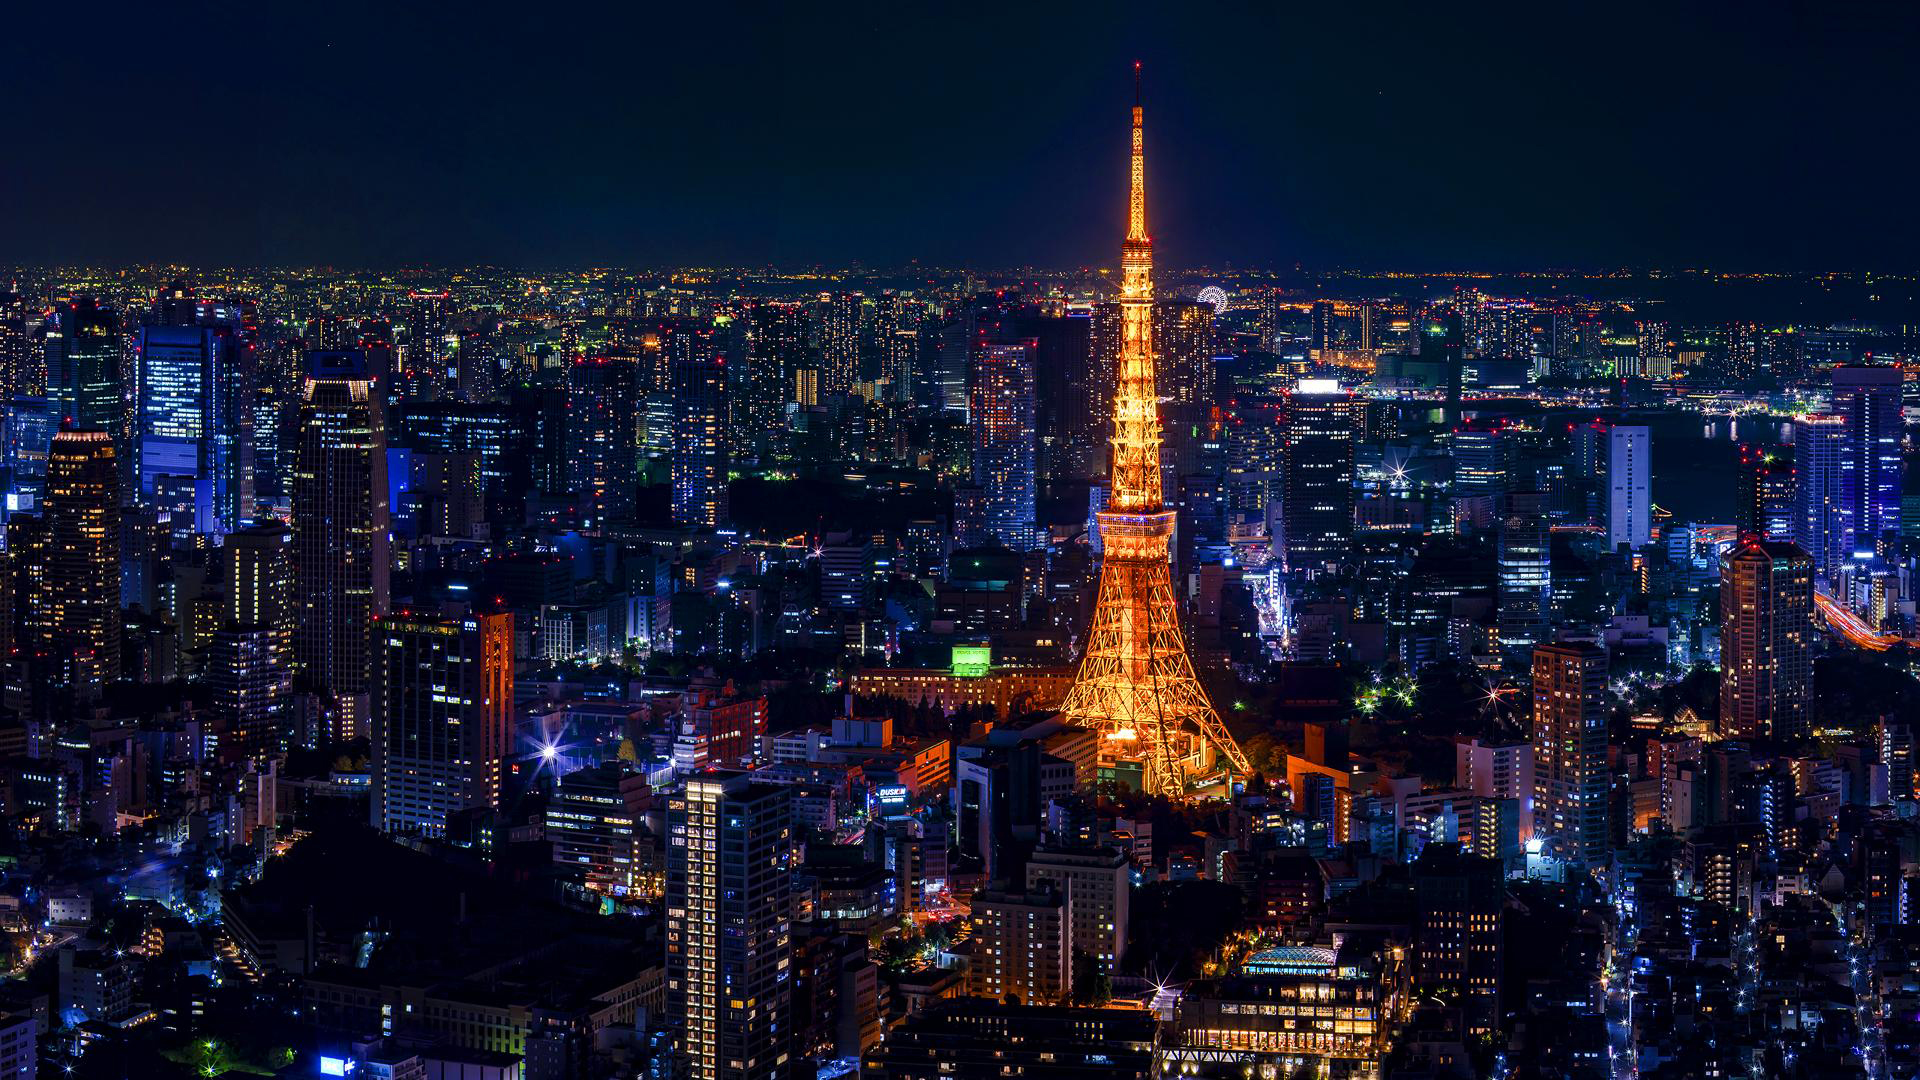 Tokyo Tower Lit Up